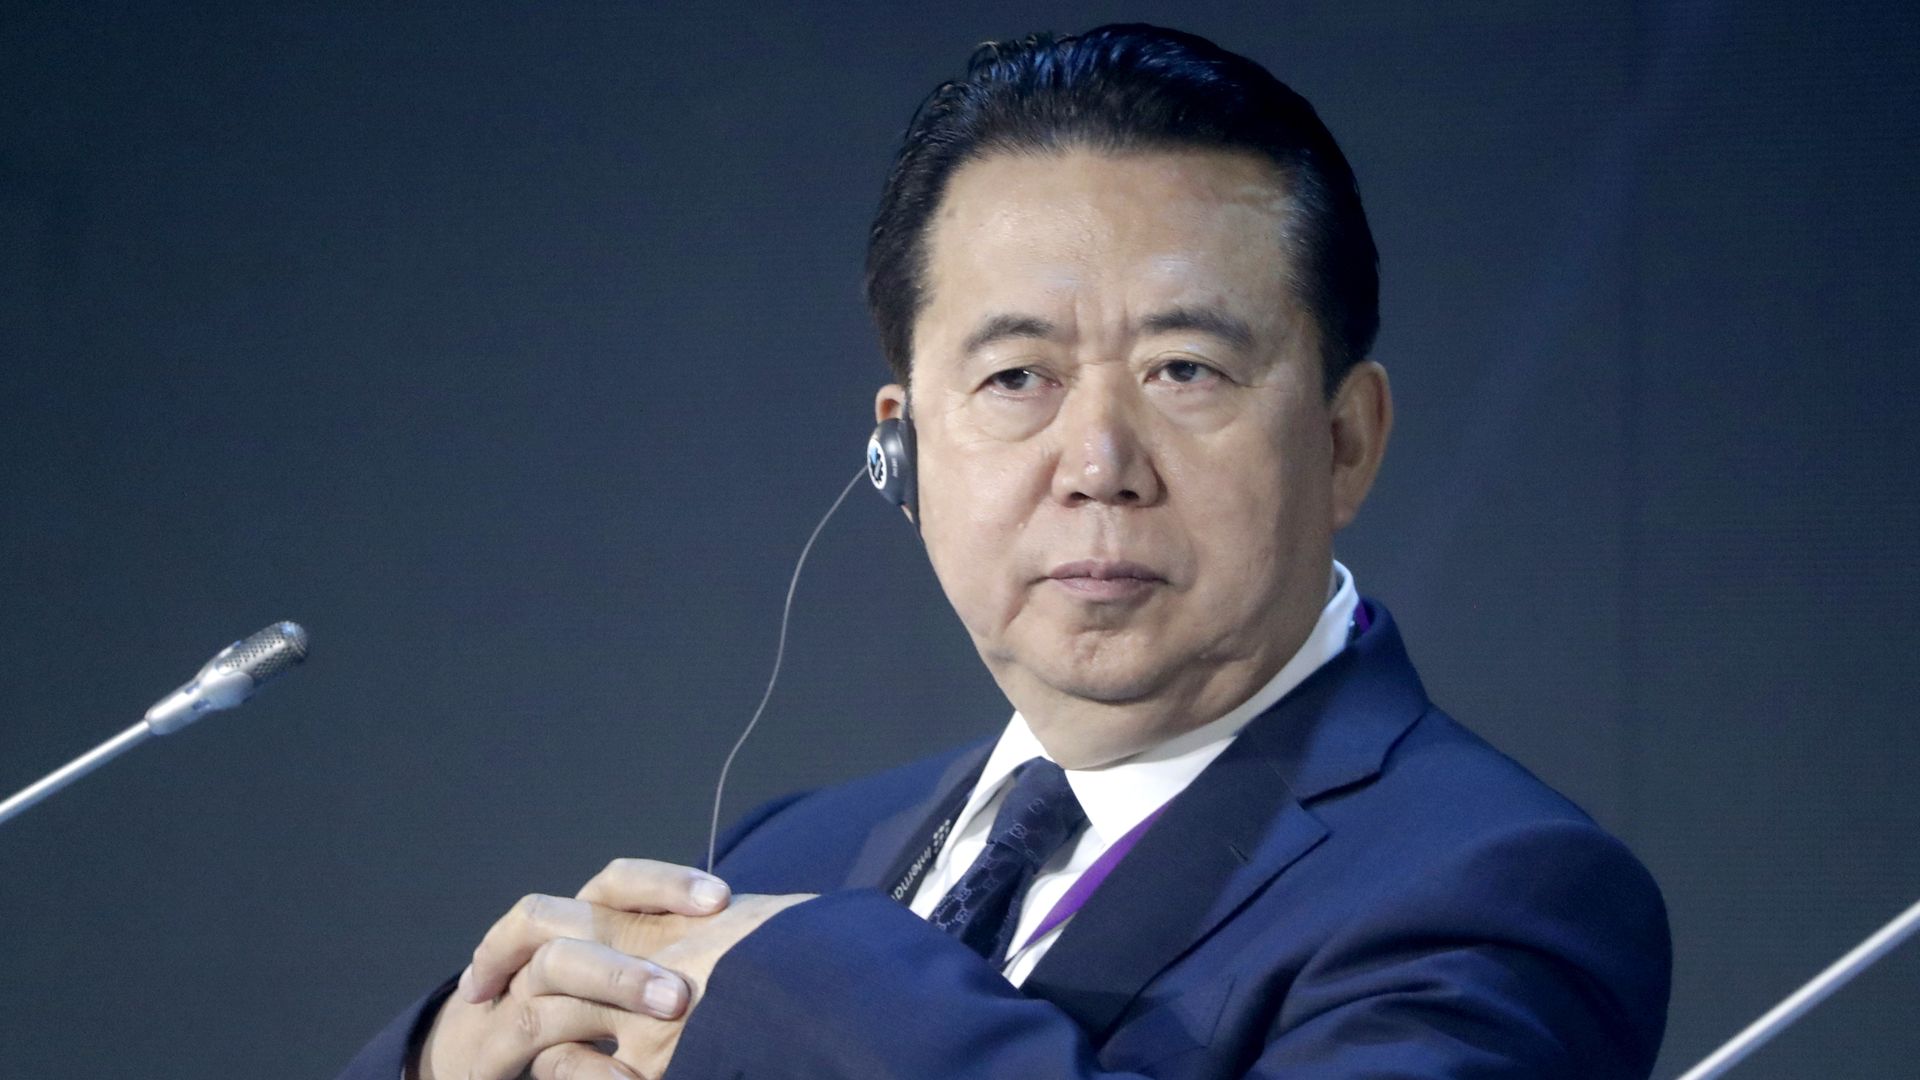 Interpol President Meng Hongwei. Photo: Mikhail Metzel/TASS via Getty Images